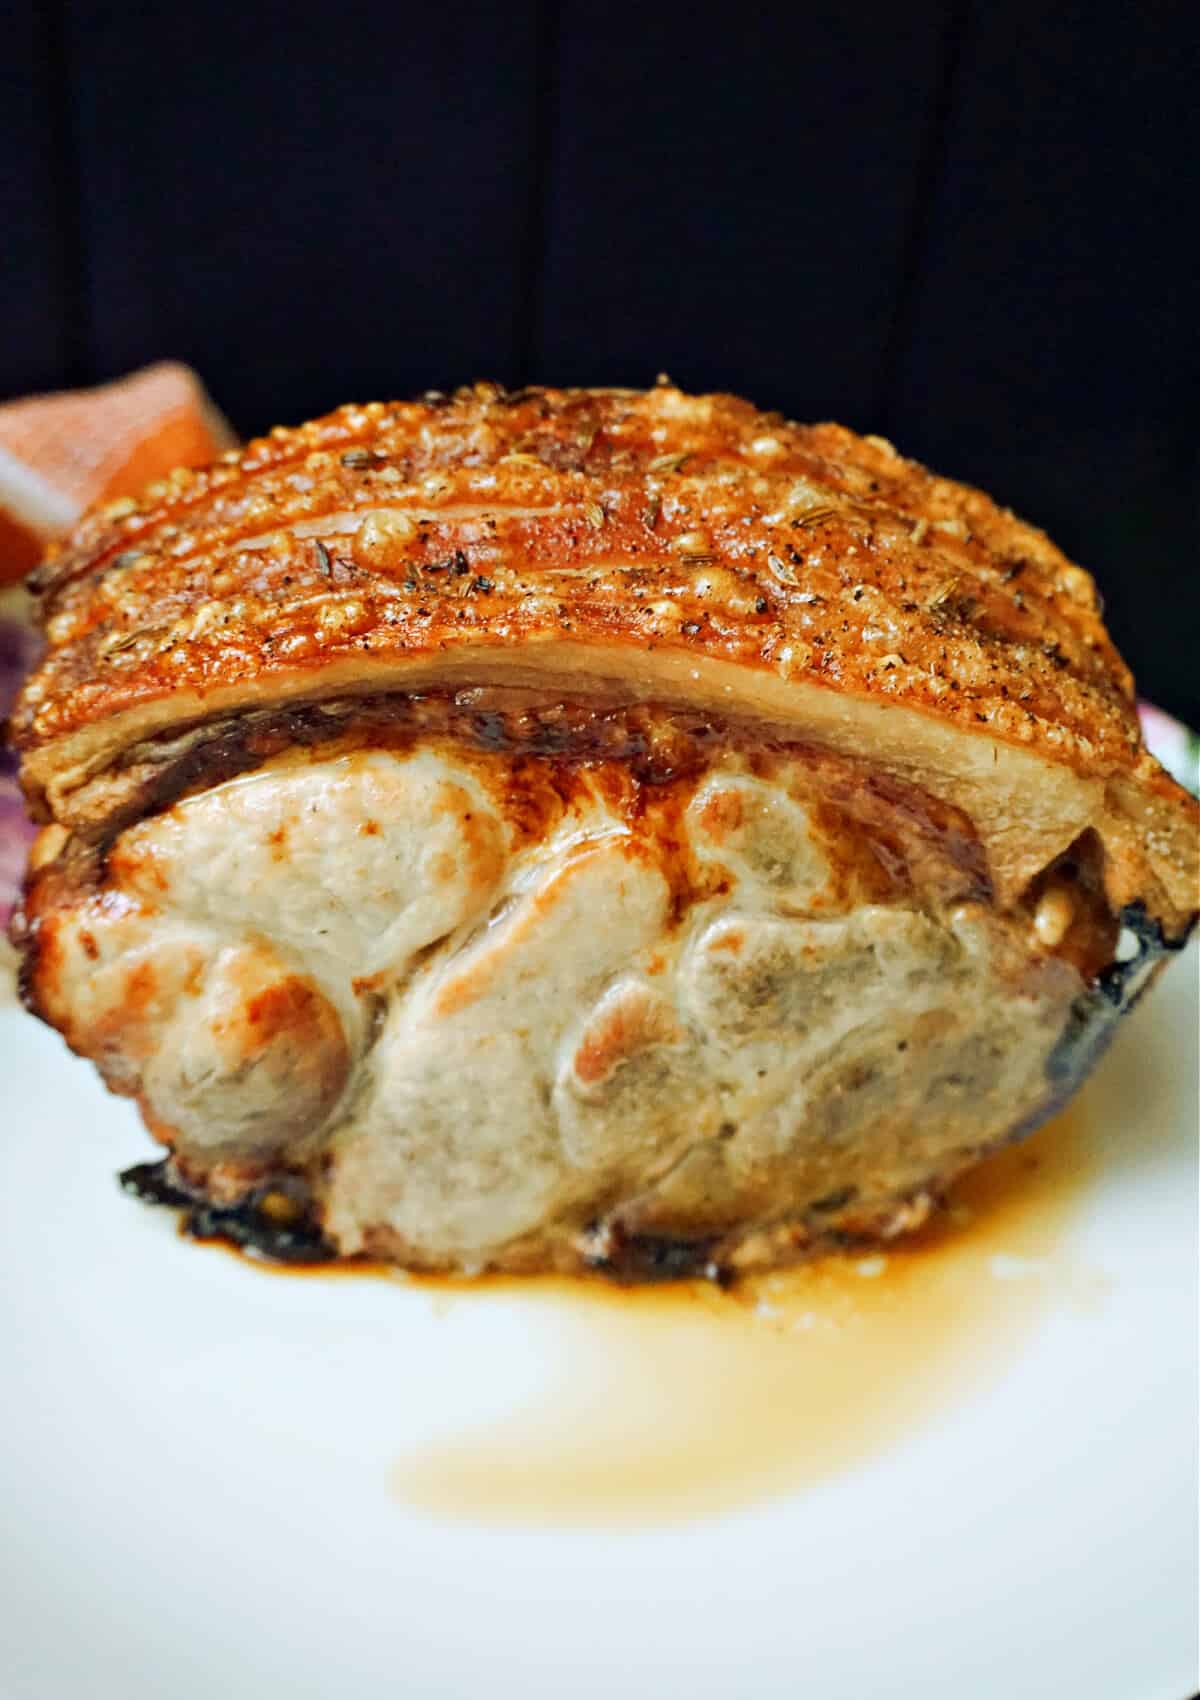 A piece of roast pork on a plate.